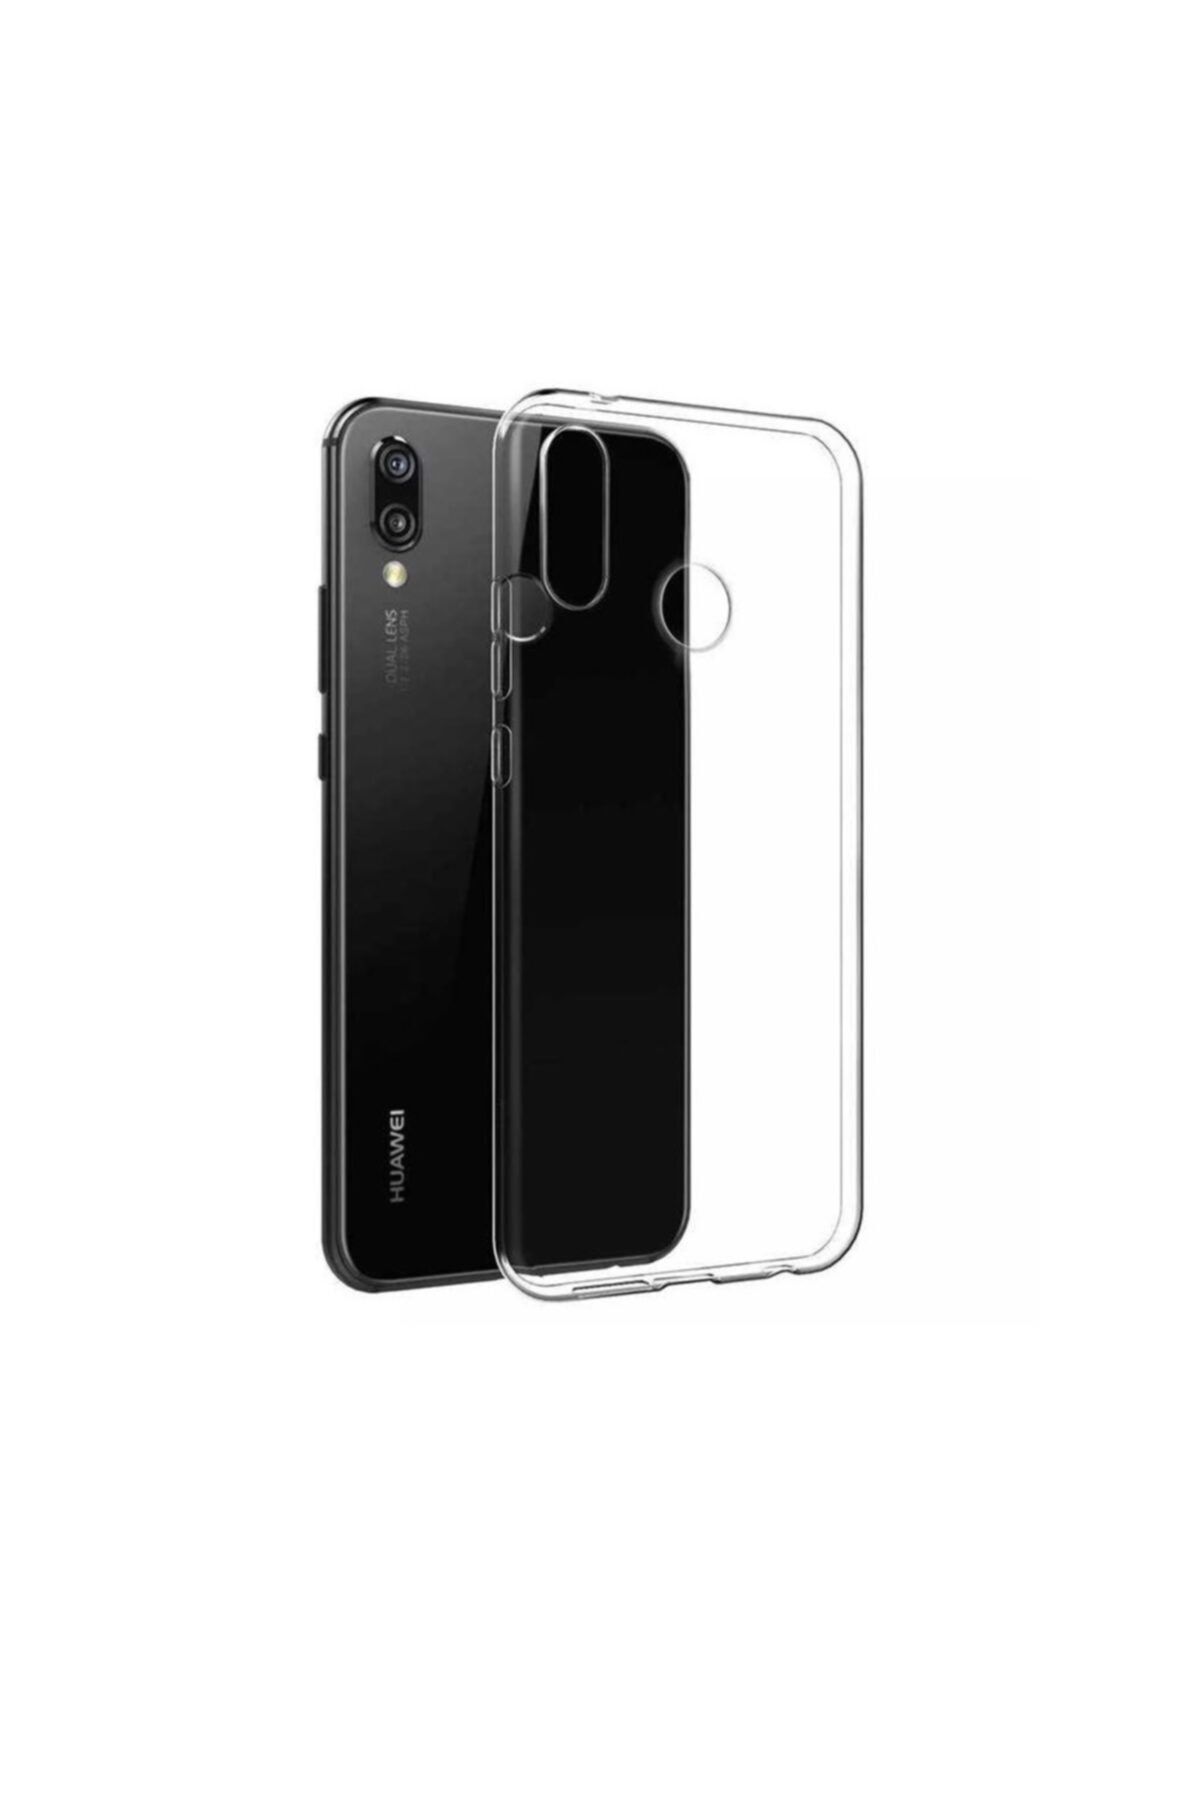 Penguen Huawei Y7 2019 Uyumlu Şeffaf Silikon Kılıf